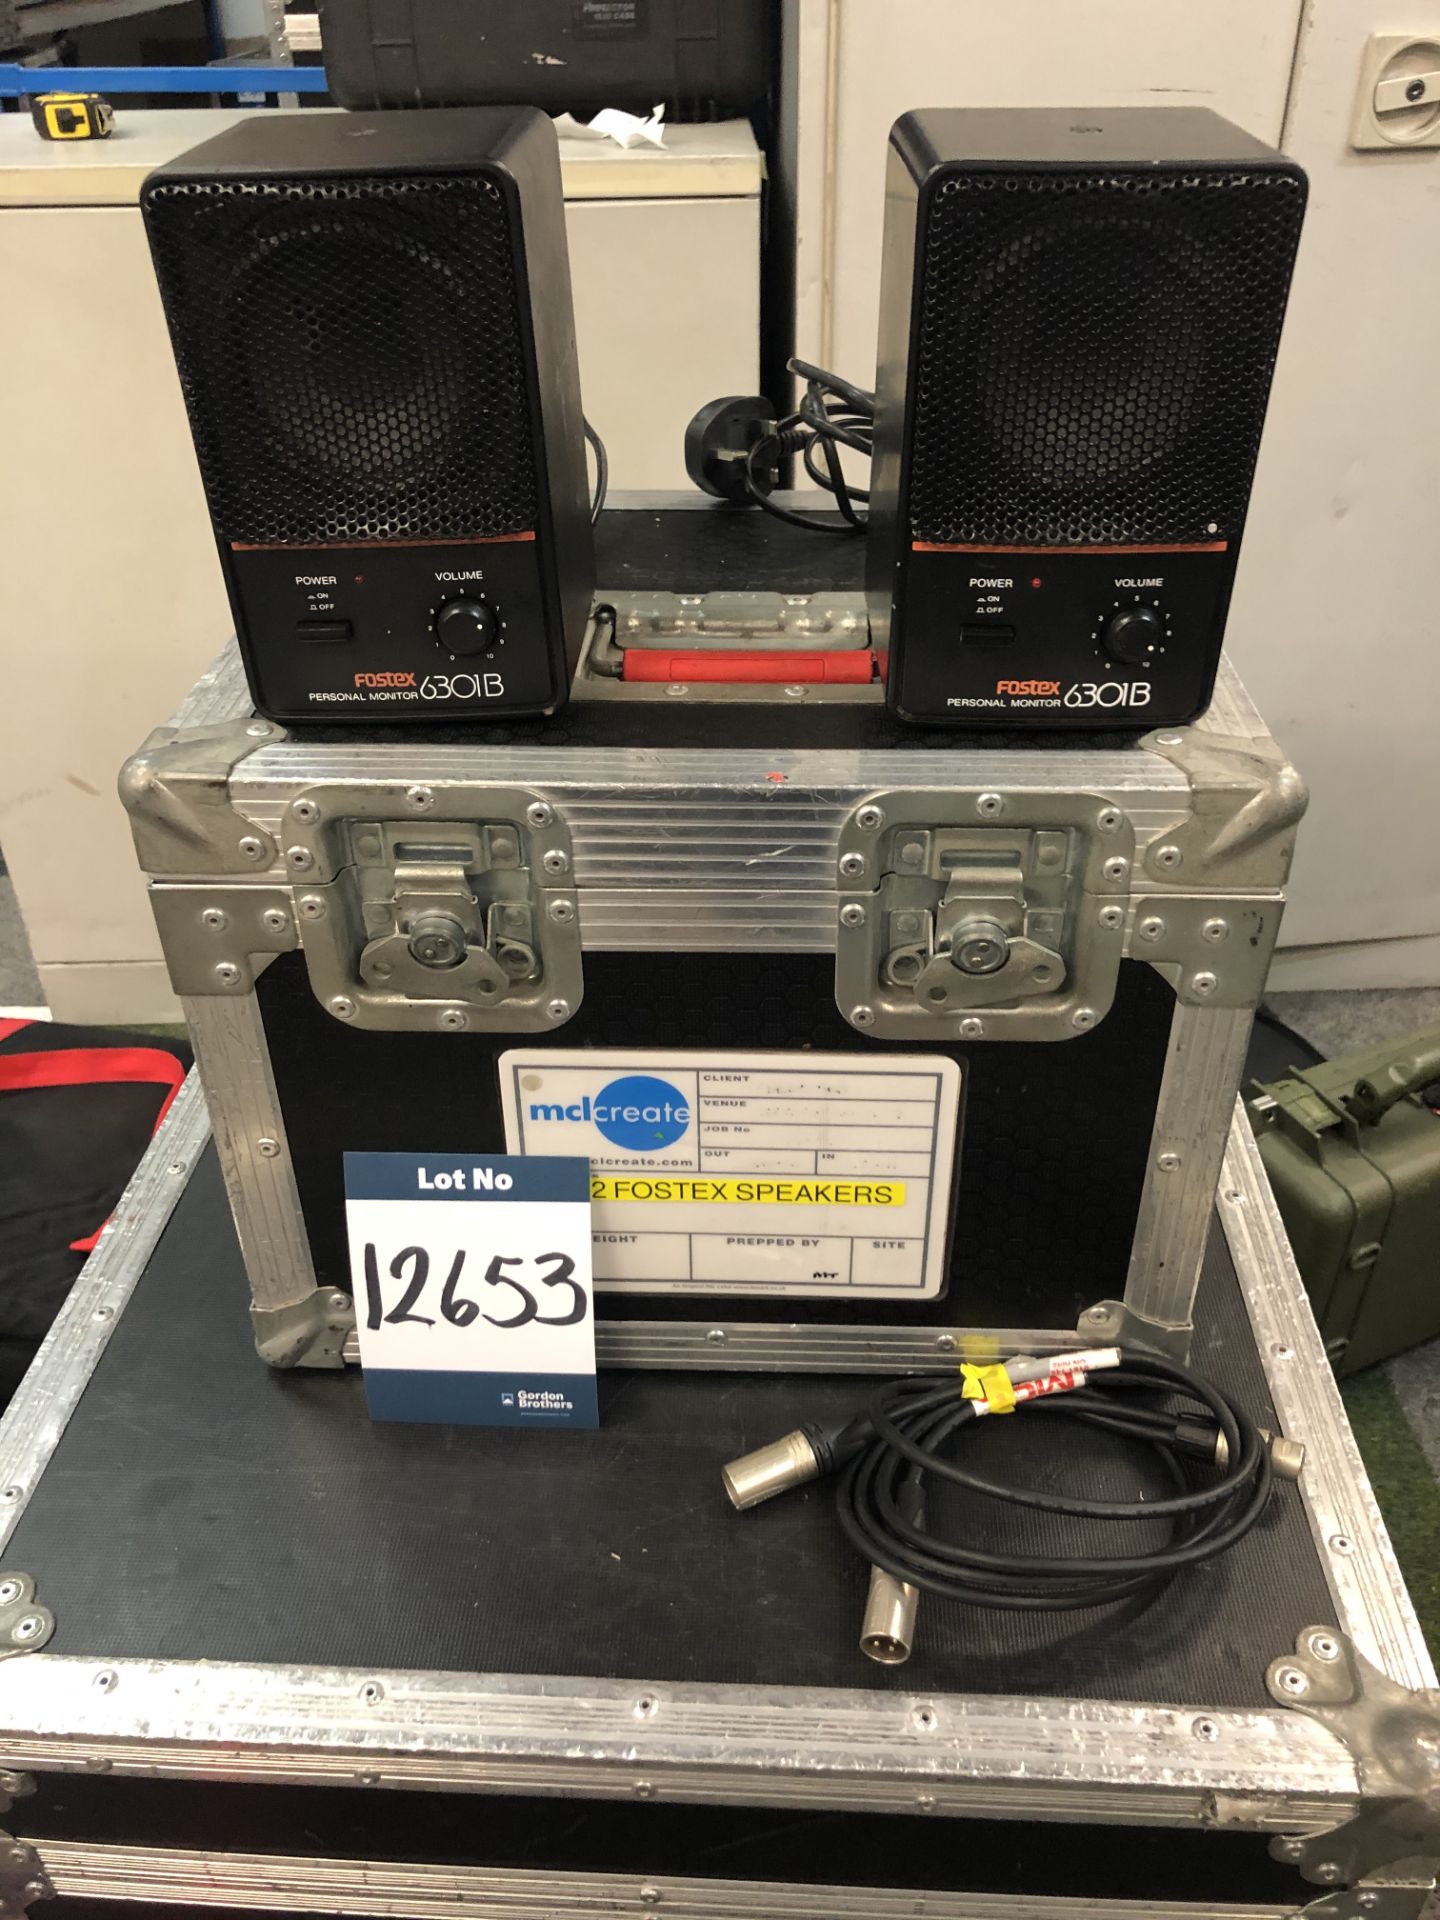 2x Fostex, 6301B3 mini speakers in transit case